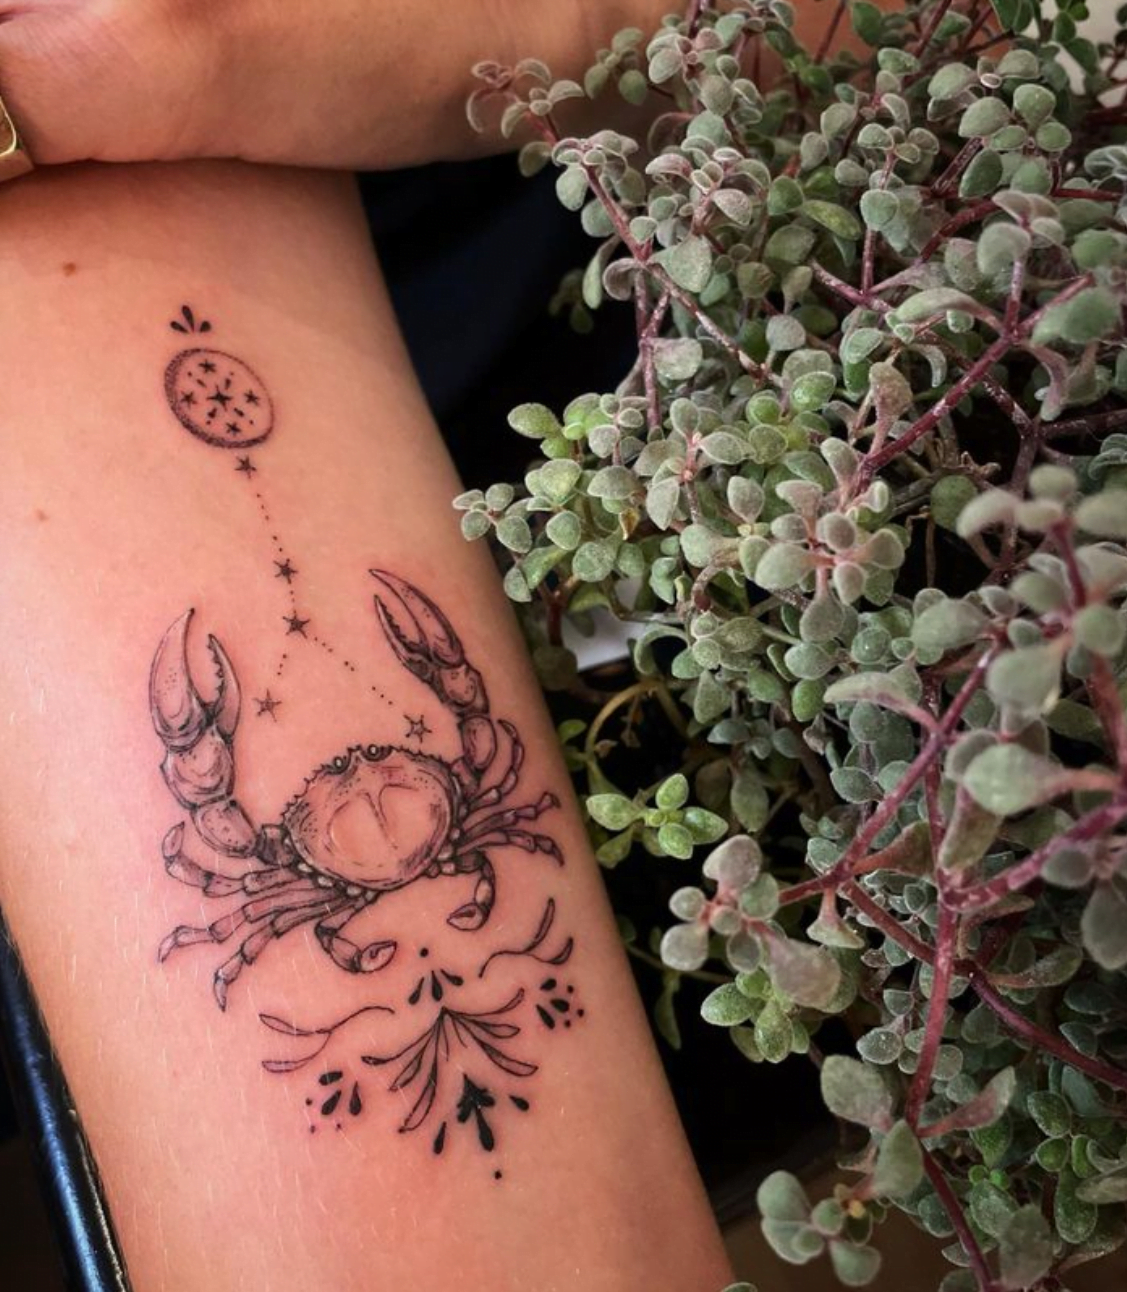 Cancer constellation tattoo on the wrist.